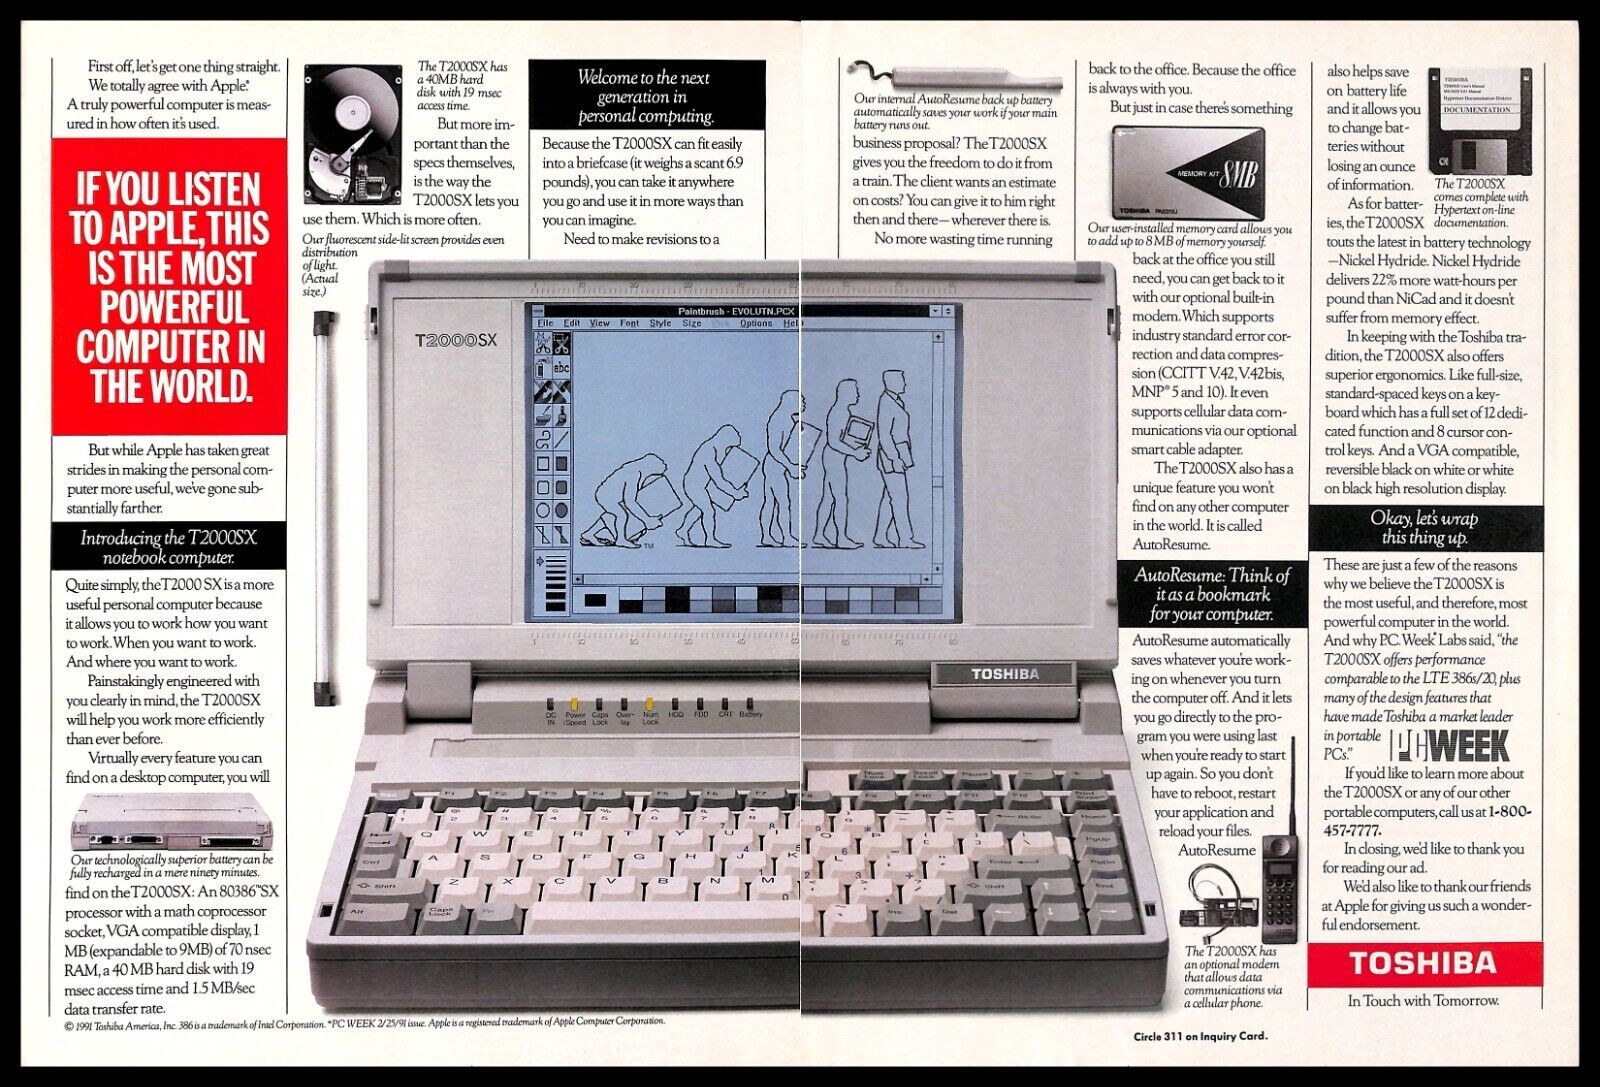 1991 Toshiba T2000SX Notebook Computer PRINT AD Retro Computers PC Technology